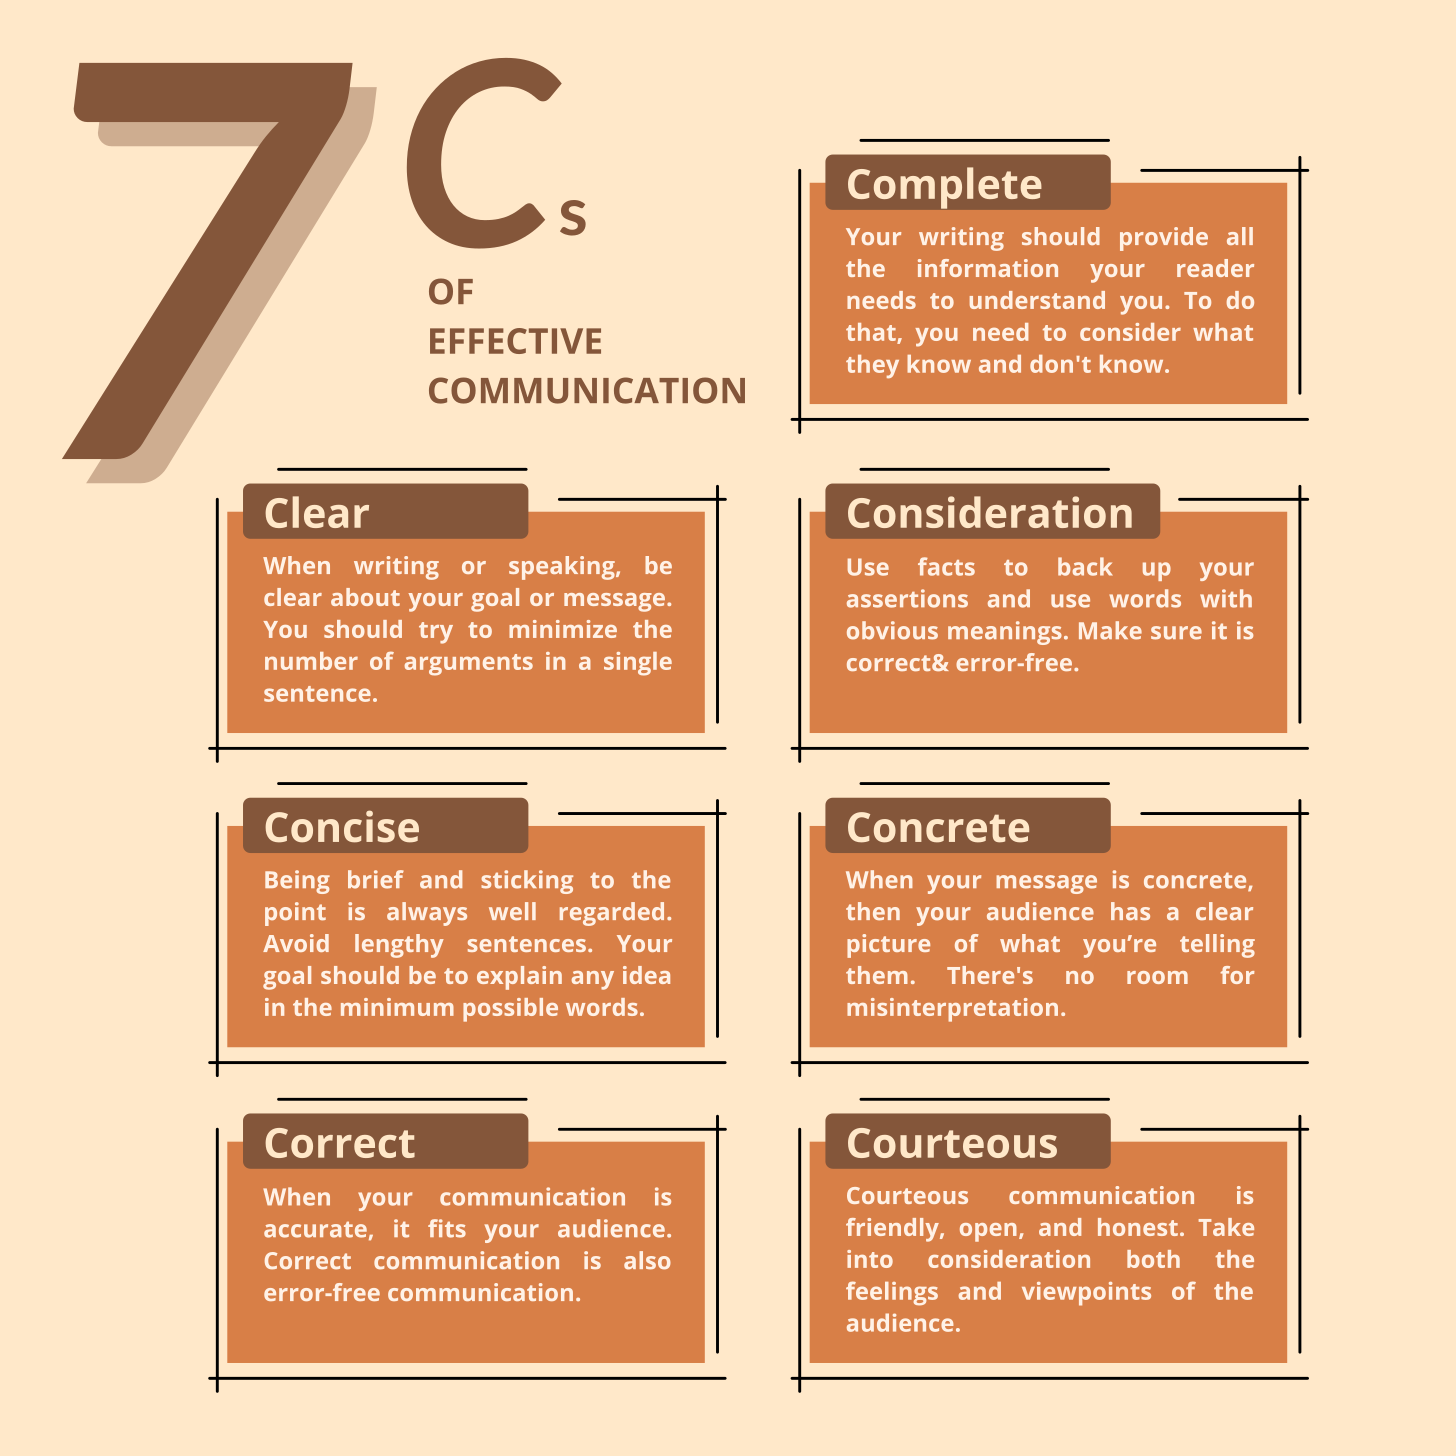 7Cs of effective communication